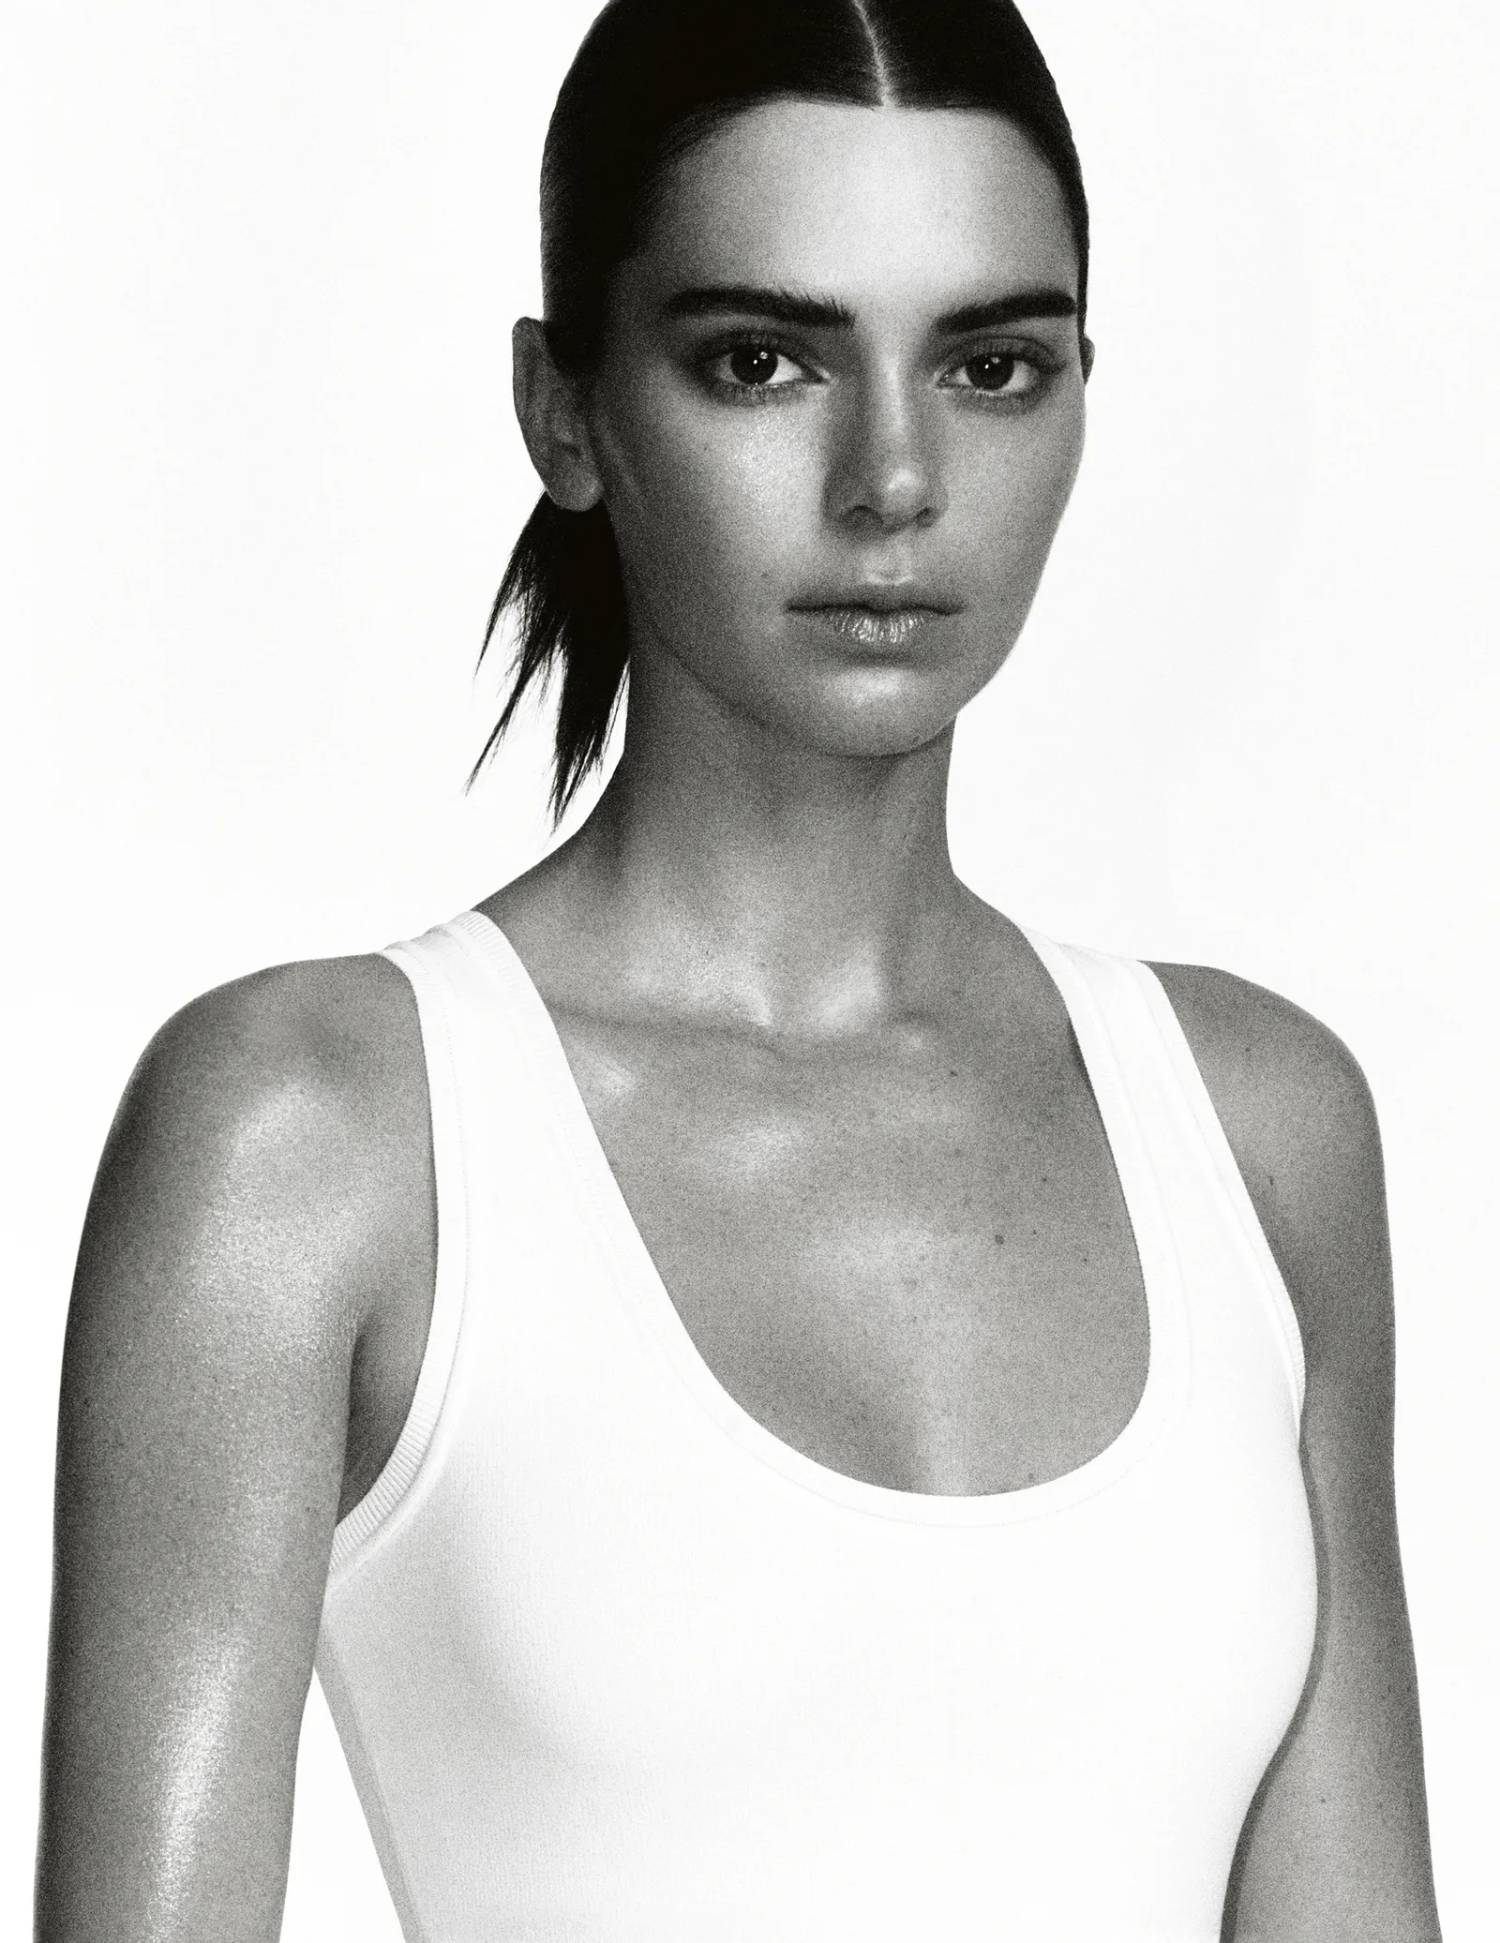 Vogue Italia Feb 2019 Kendall Jenner